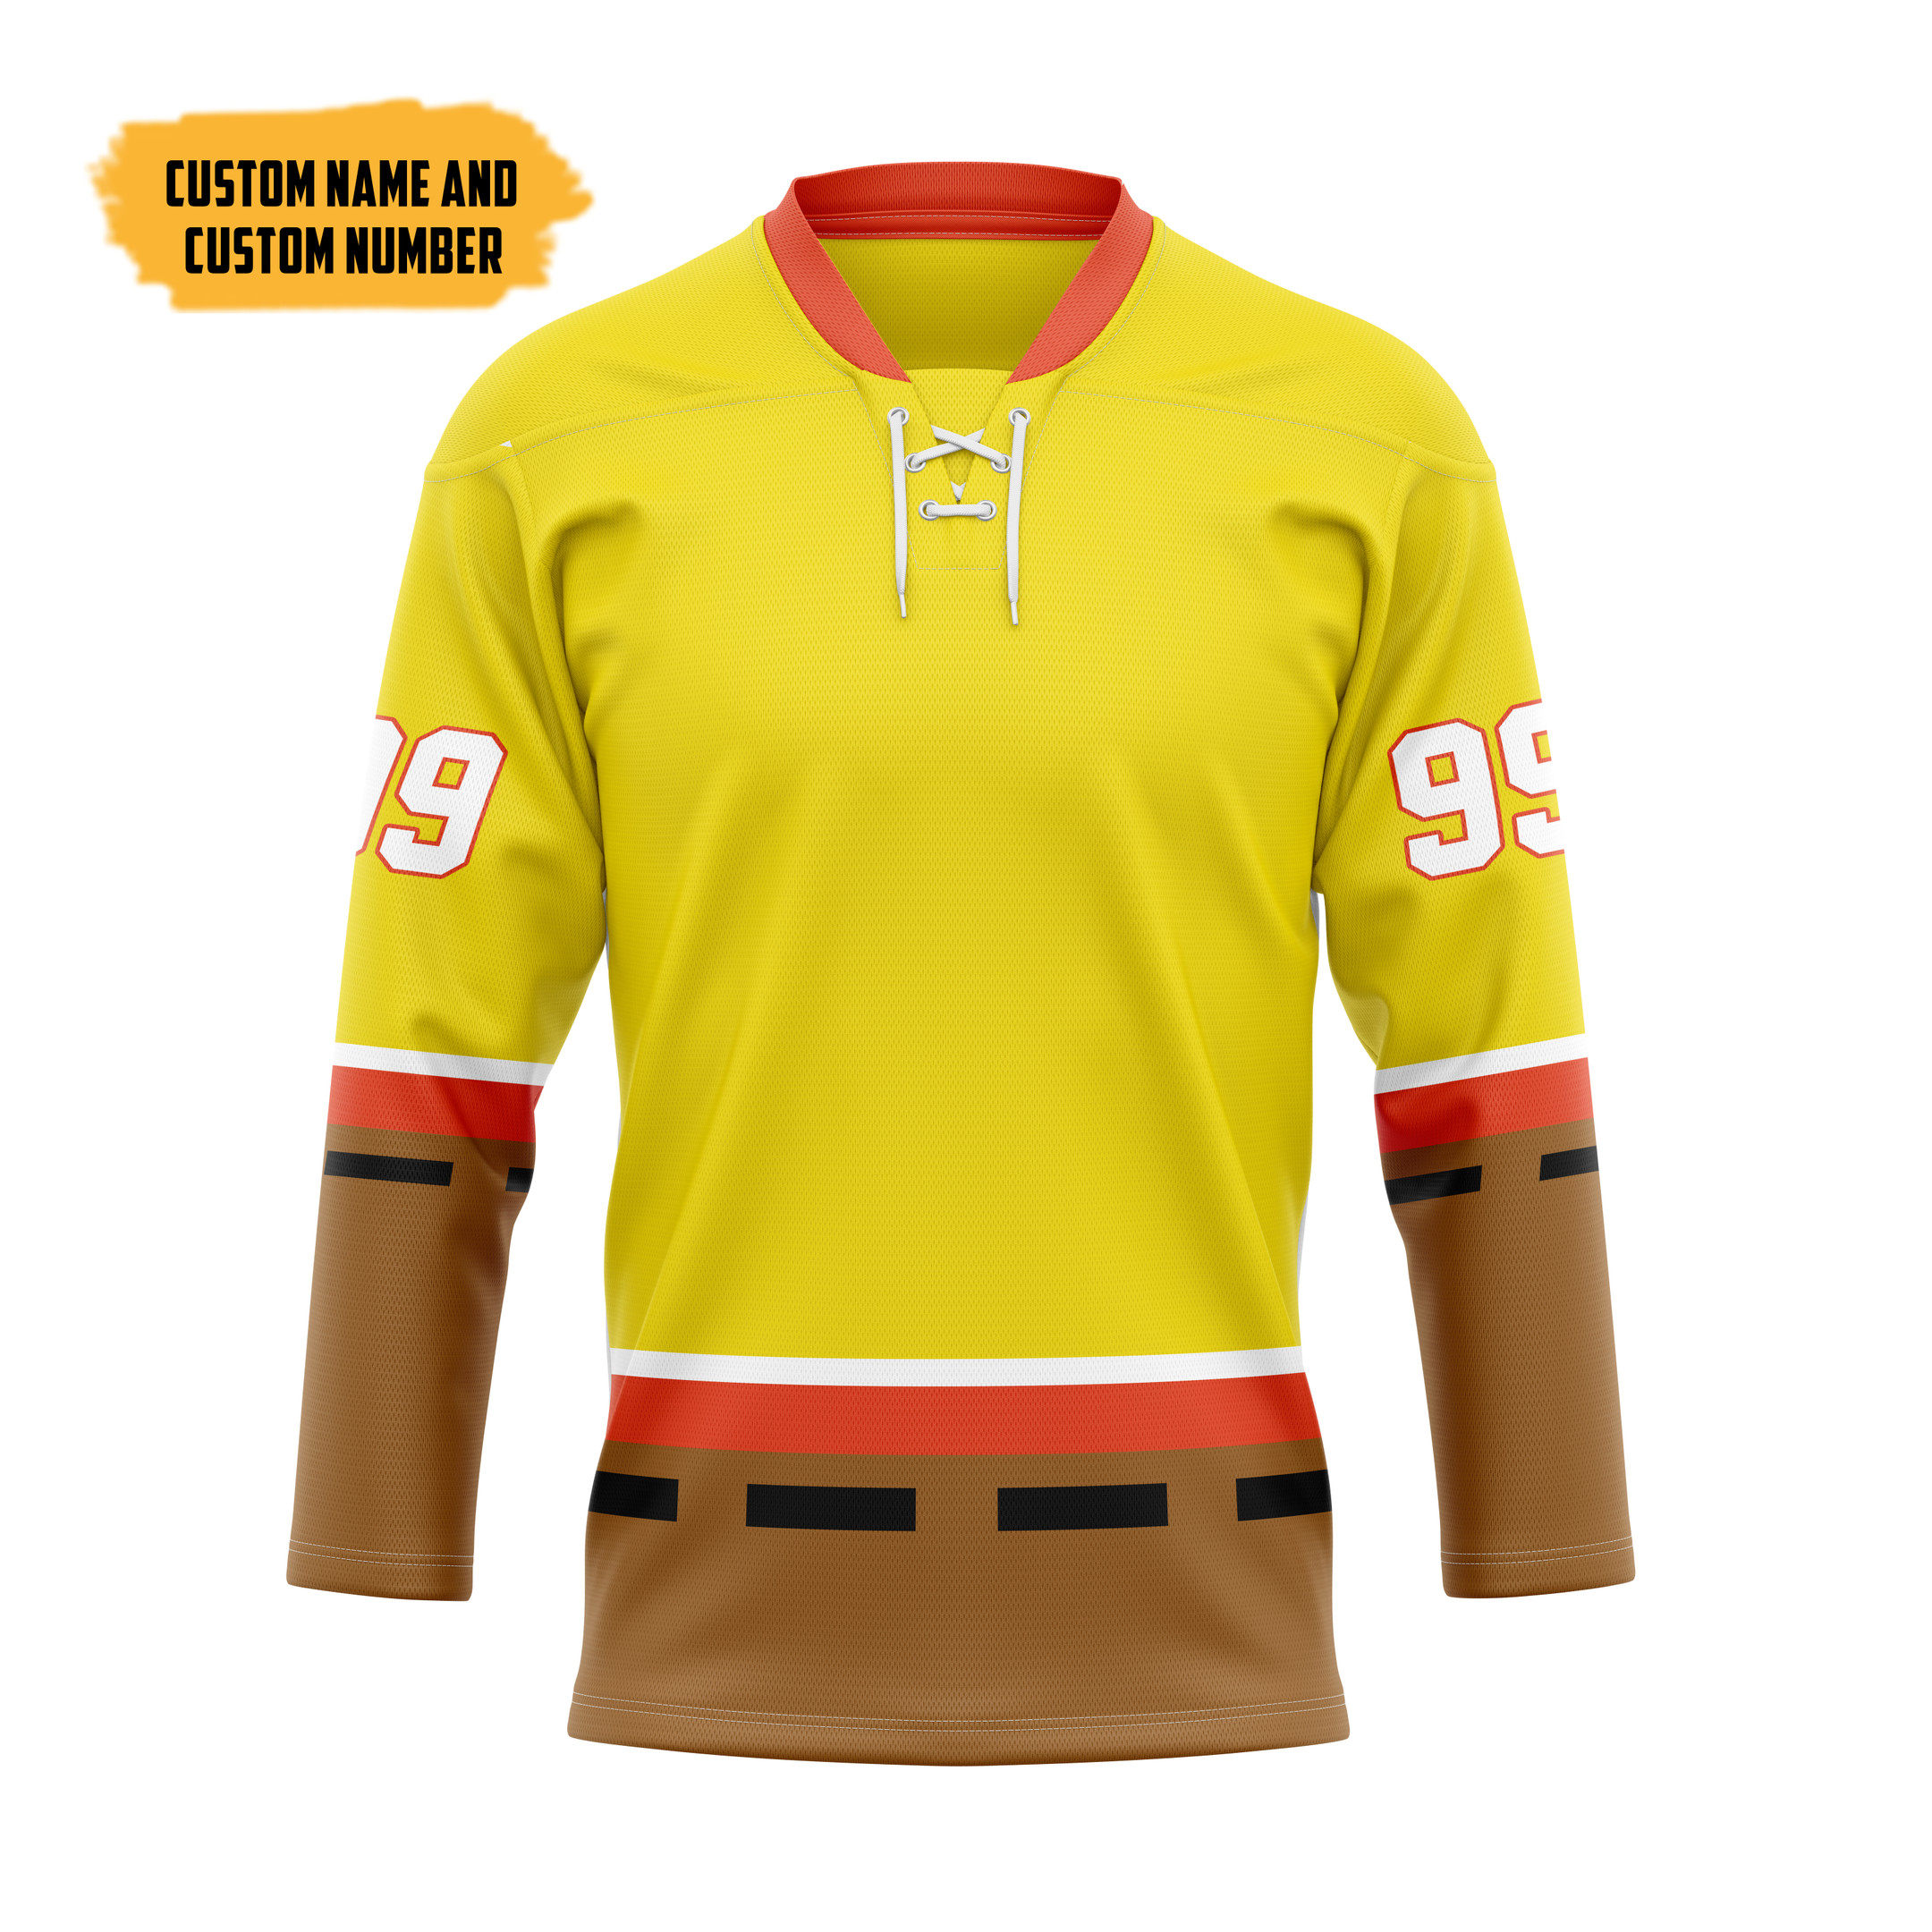 SpongeBob Custom Hockey Jersey1